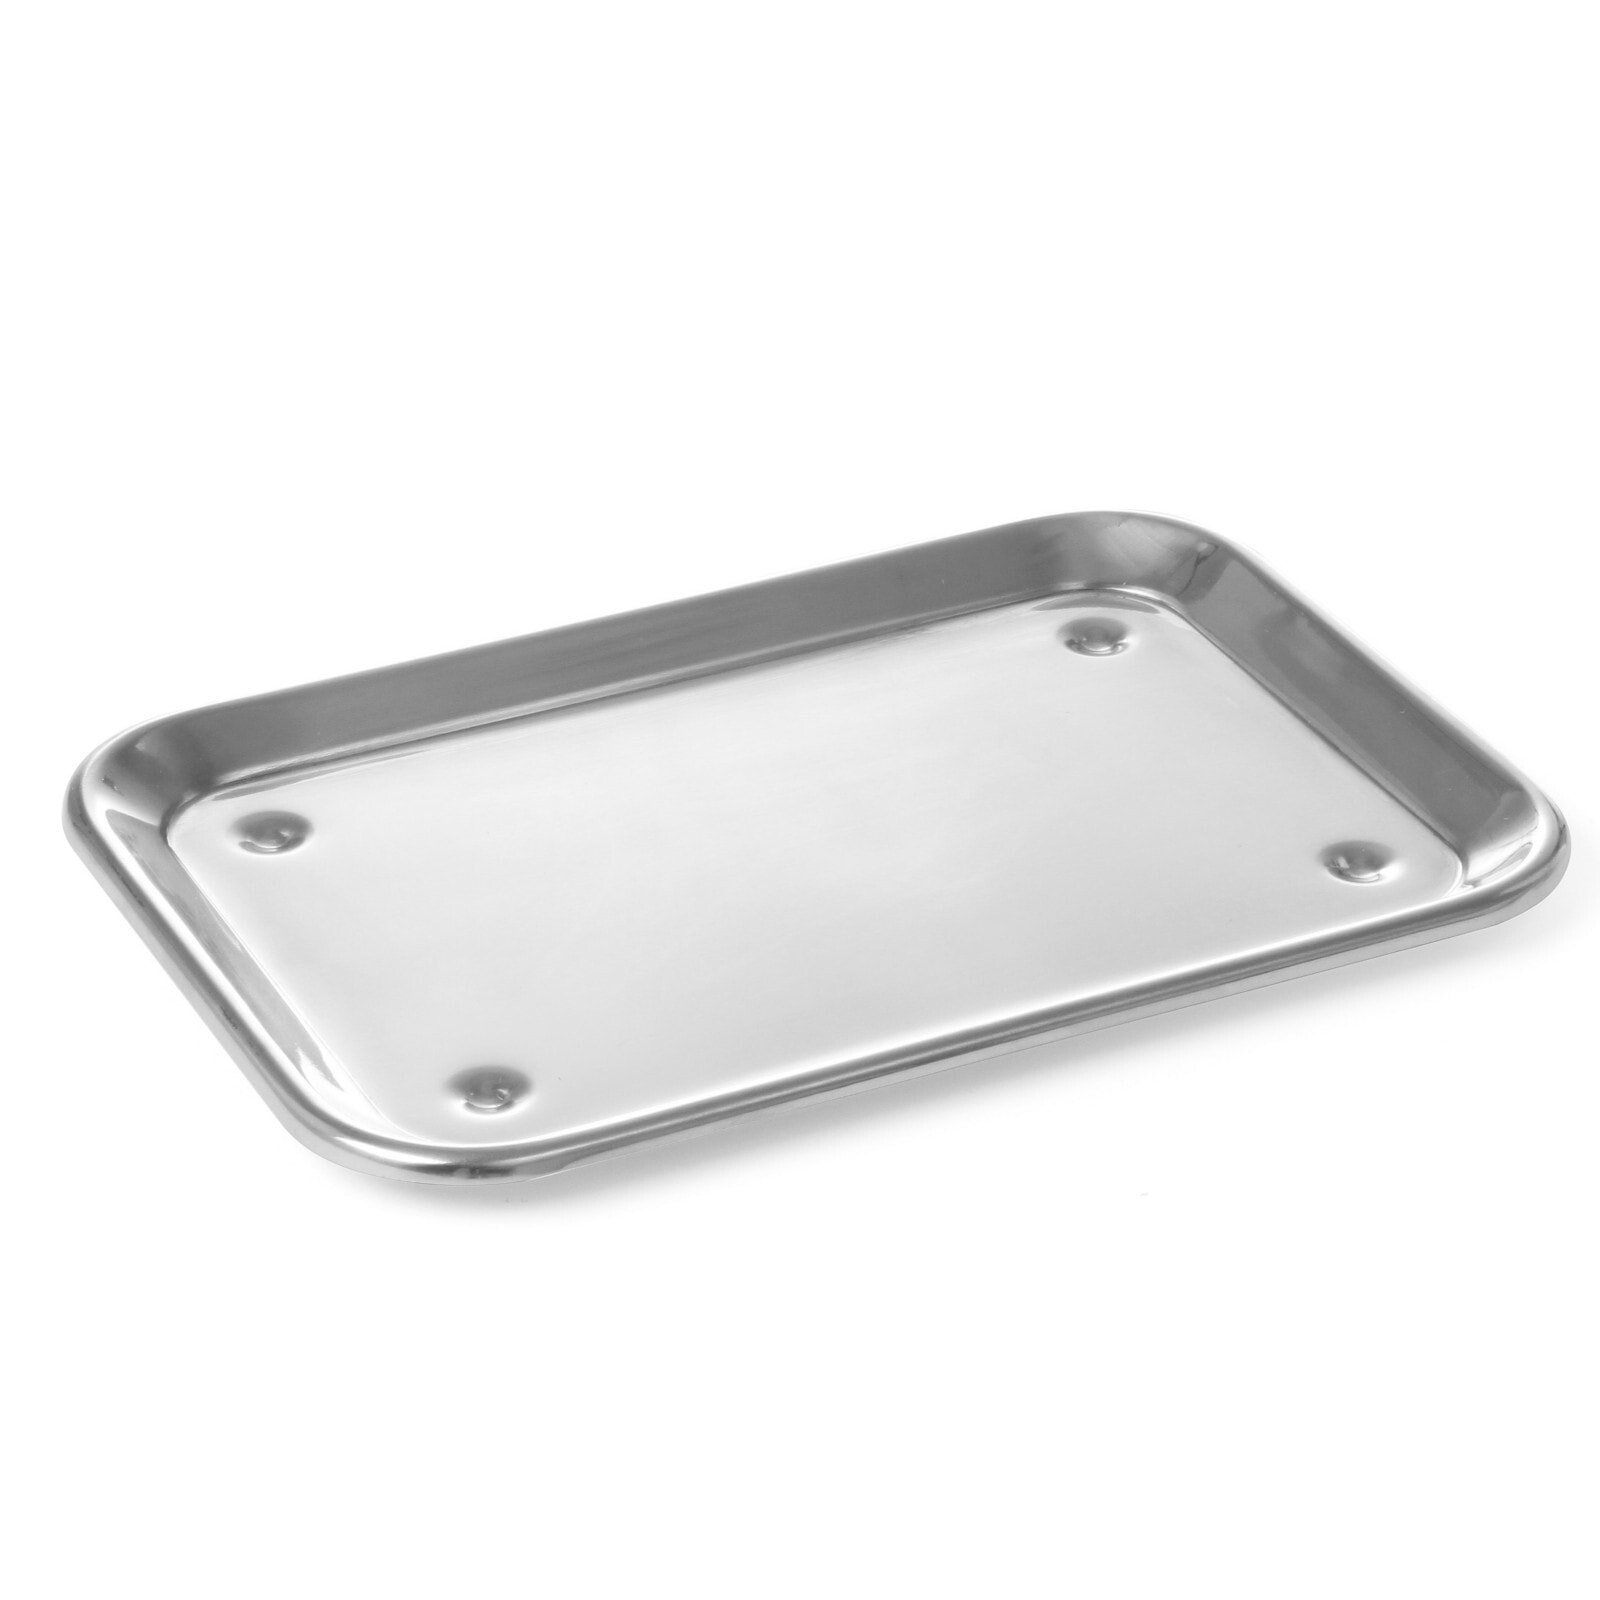 Steel display tray with food display legs 240x170mm - Hendi 407202